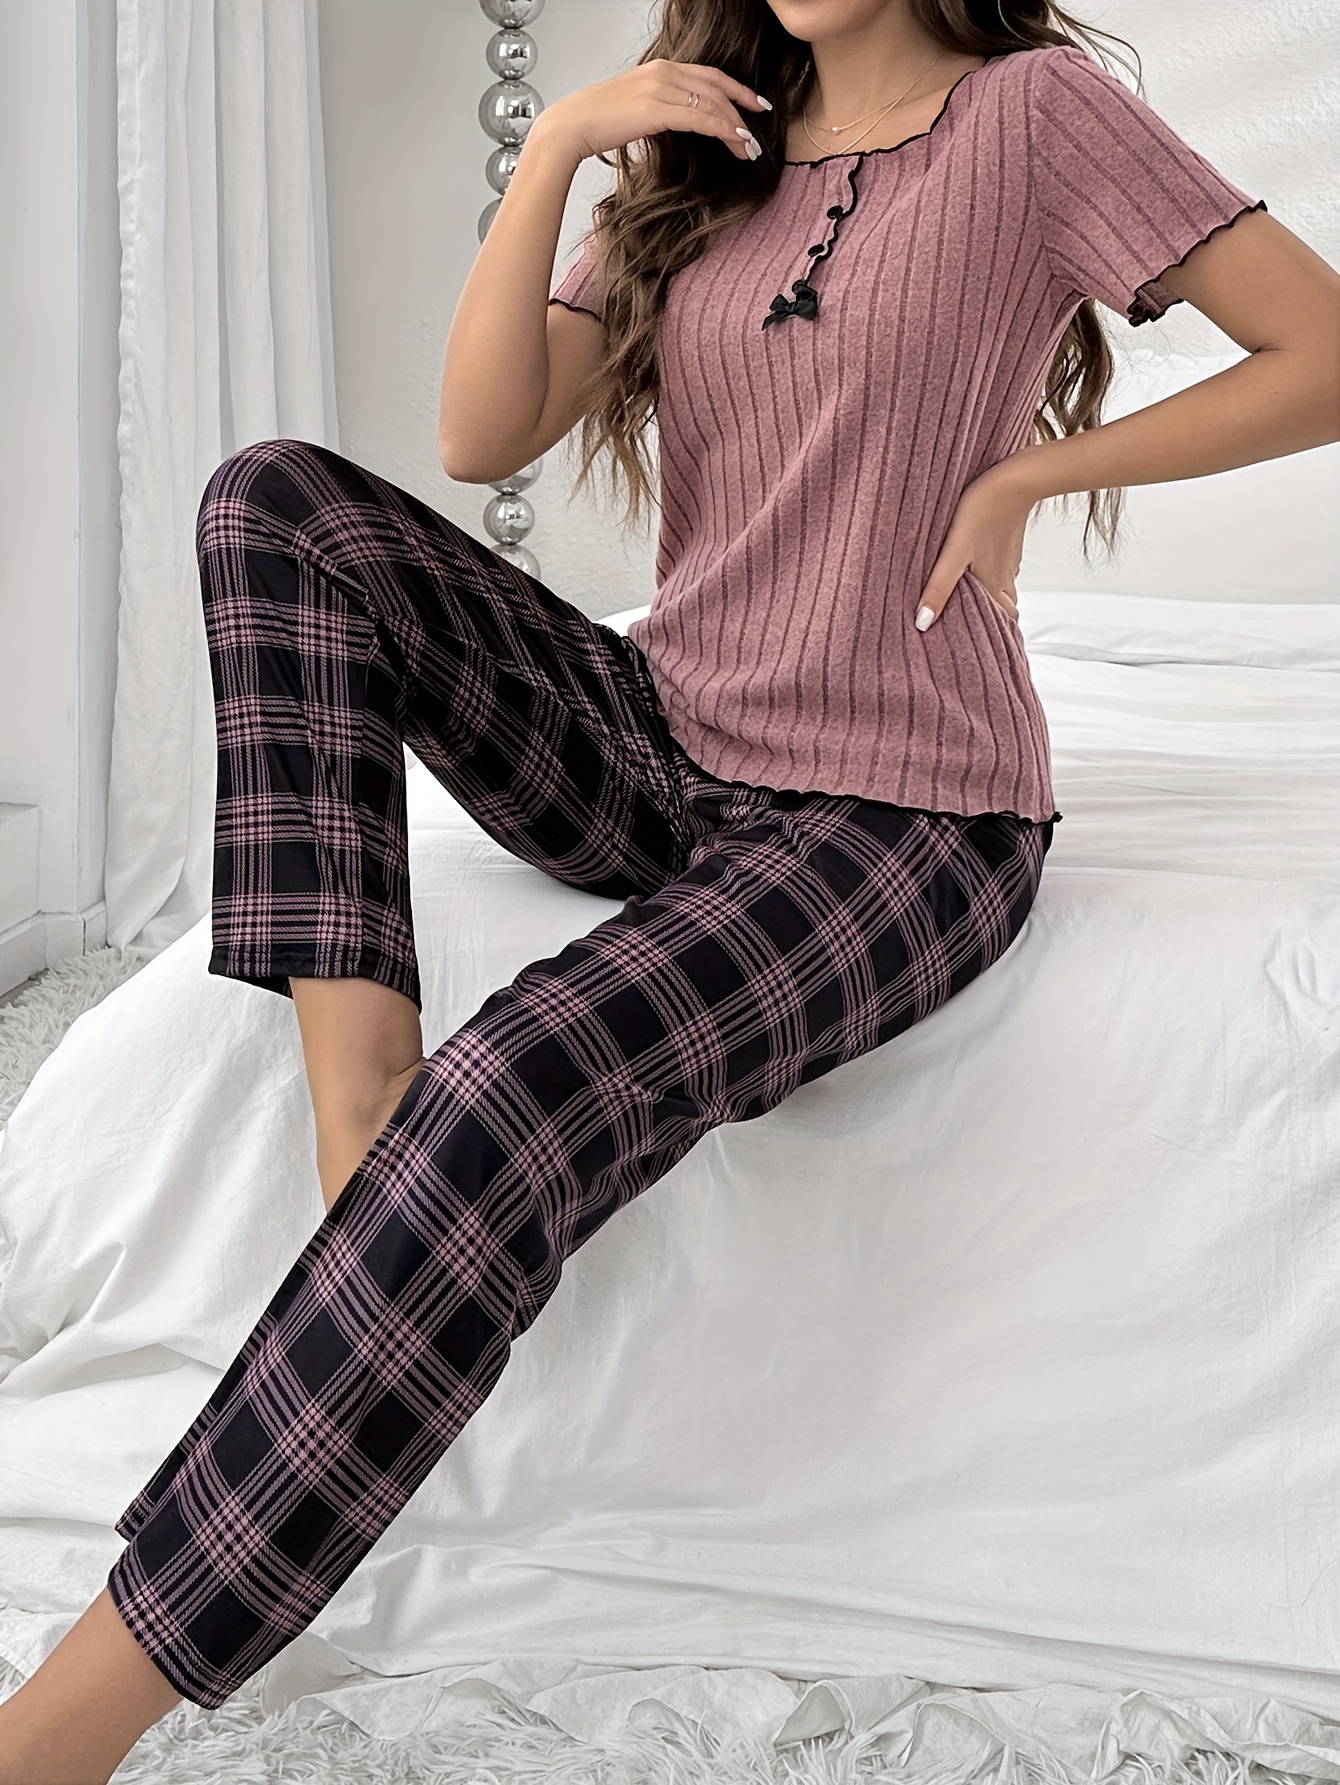 QUALFORT Women's Pajamas Set Short Sleeve/Sleeveless Sleepwear